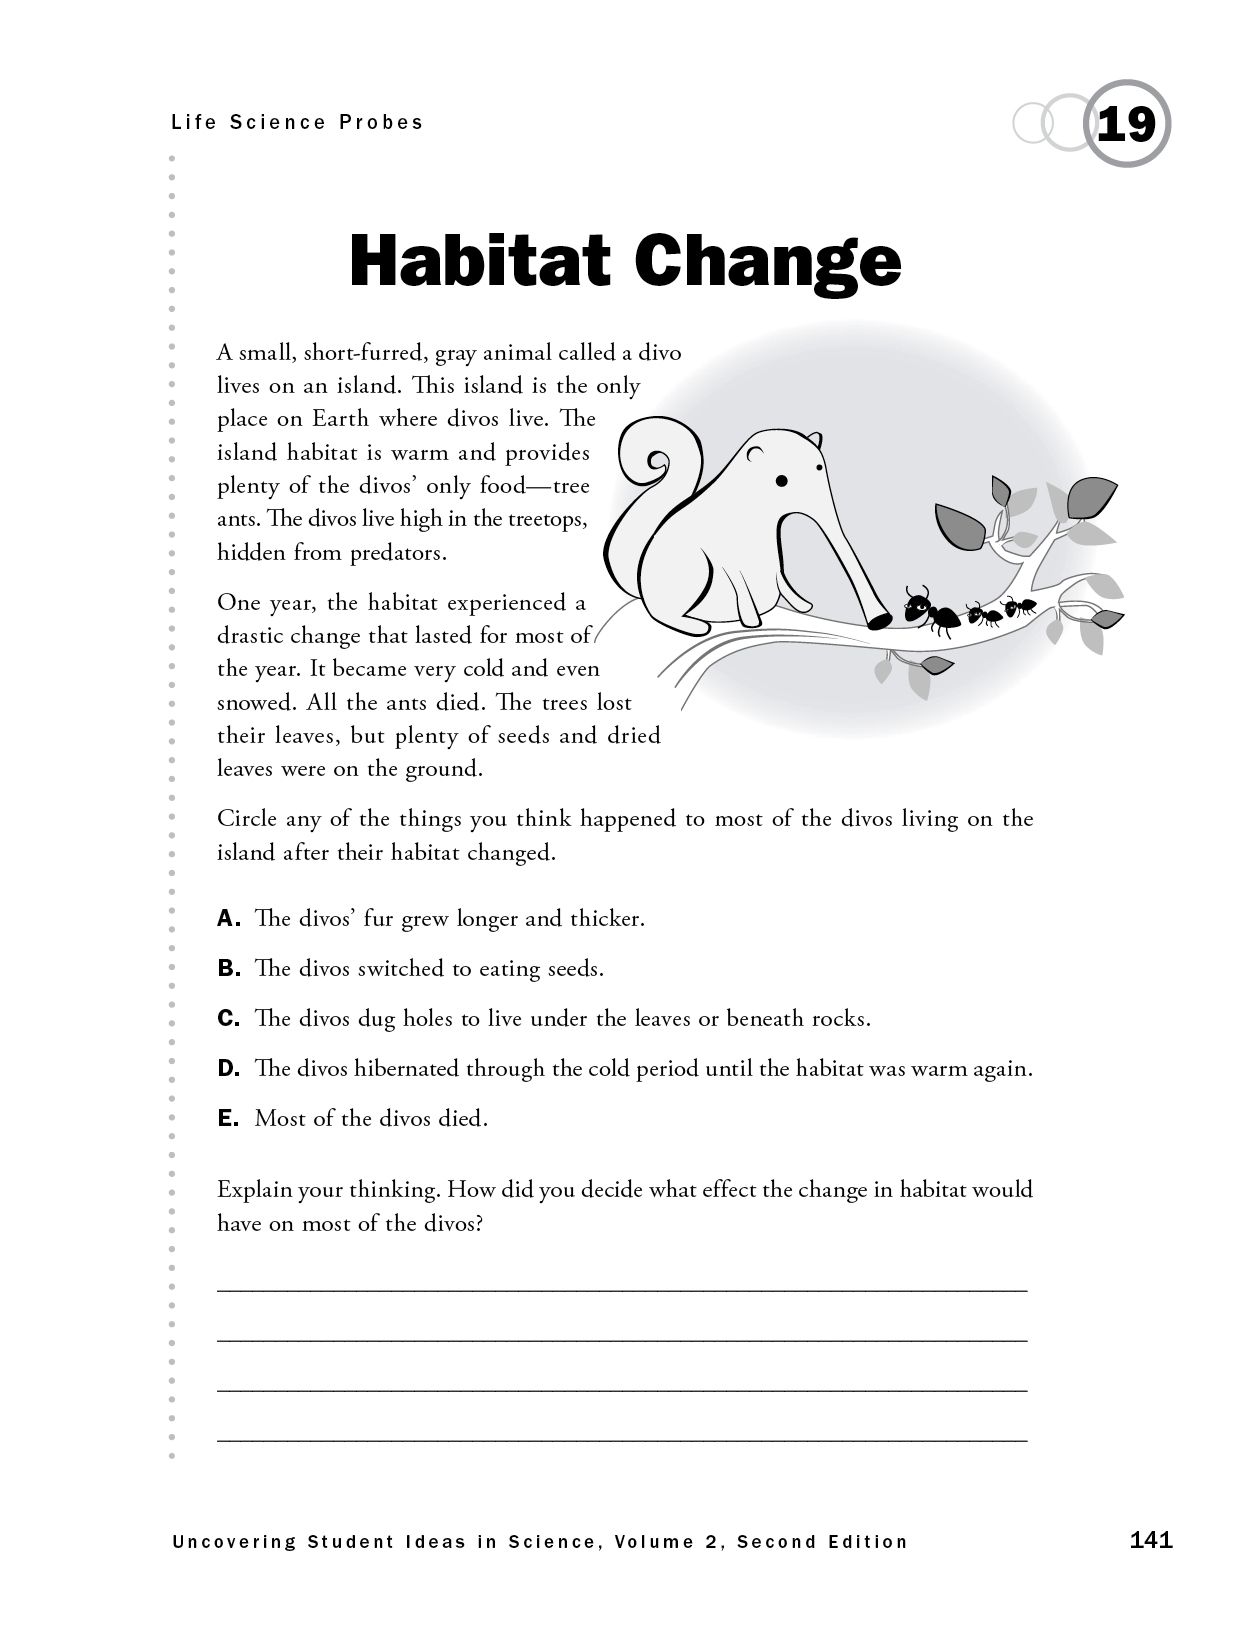 Habitat Change